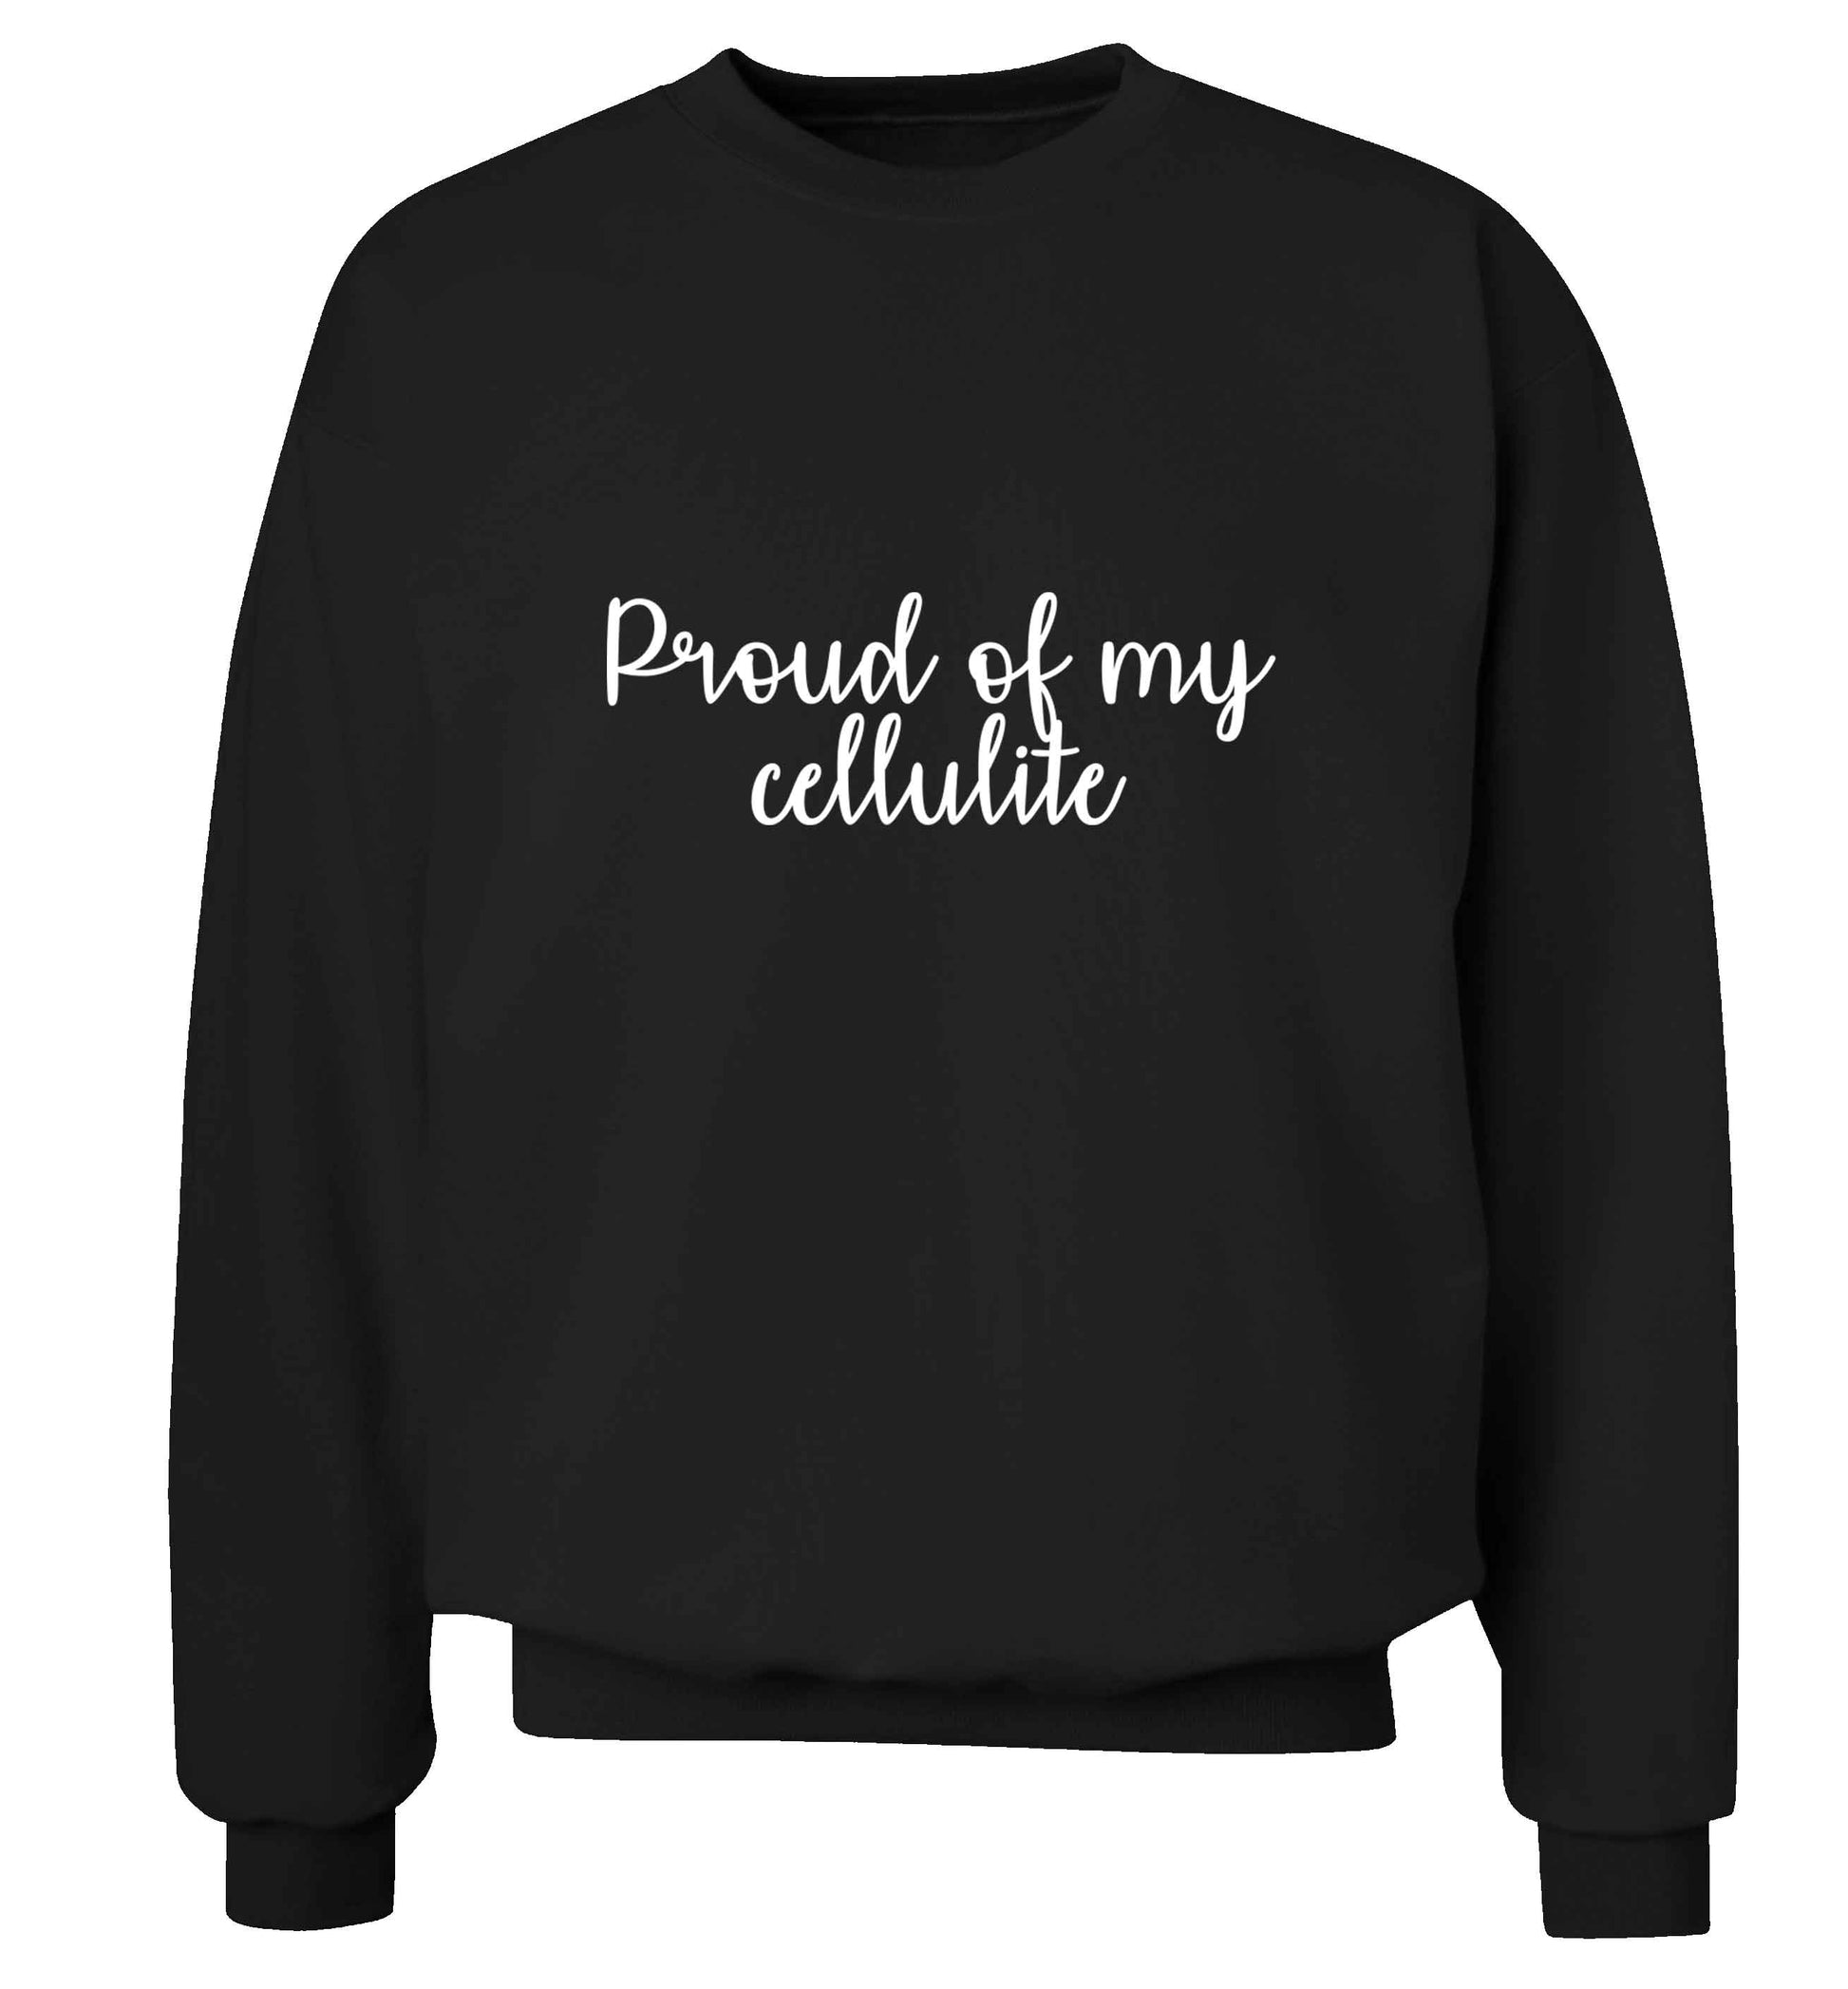 Proud of my cellulite adult's unisex black sweater 2XL